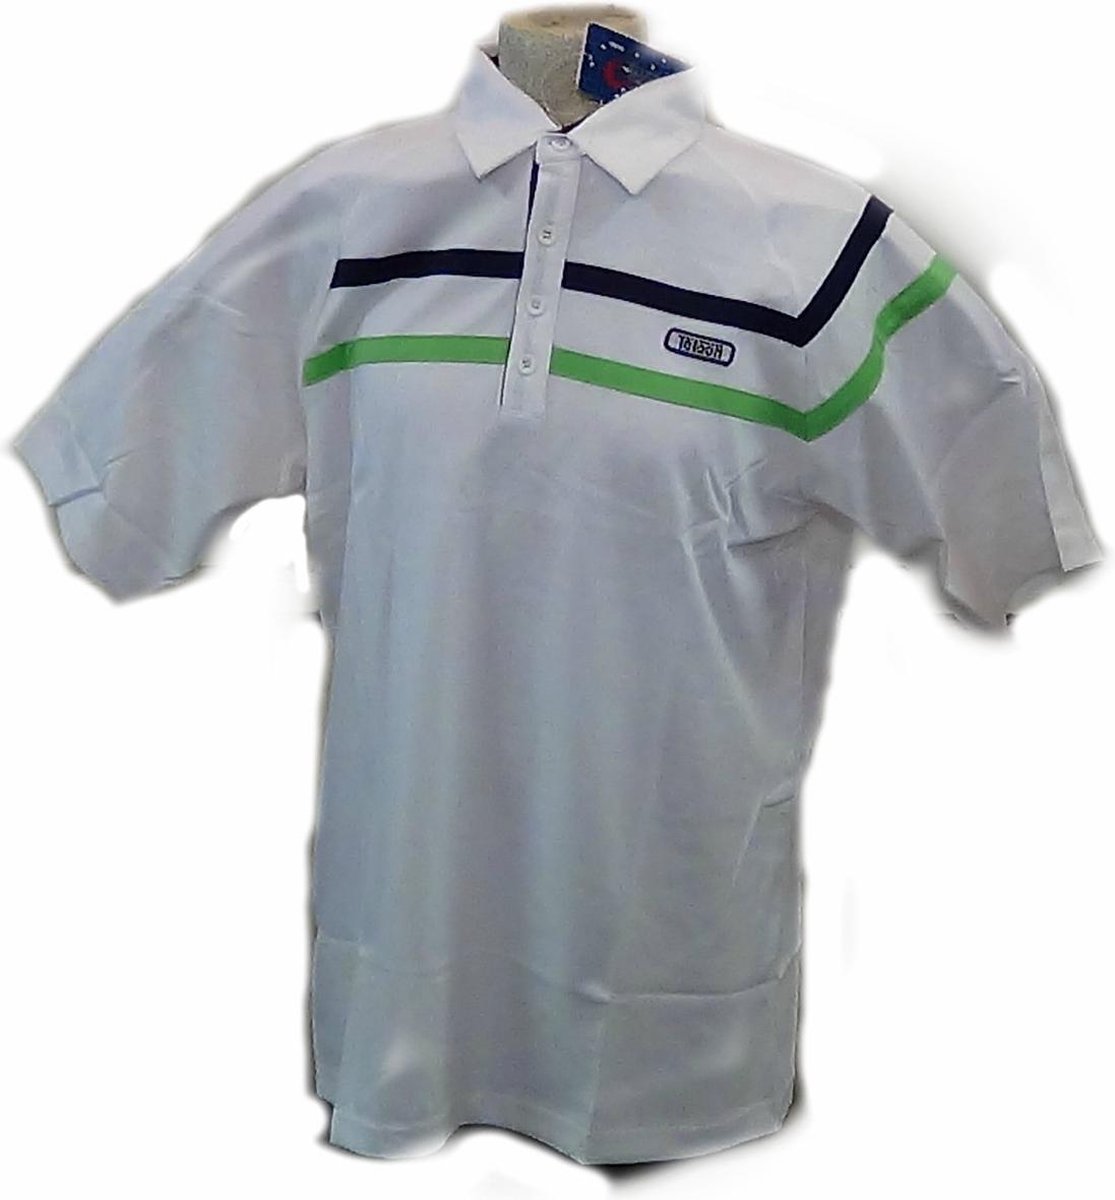 Teloon Stripe white/green tennisshirt